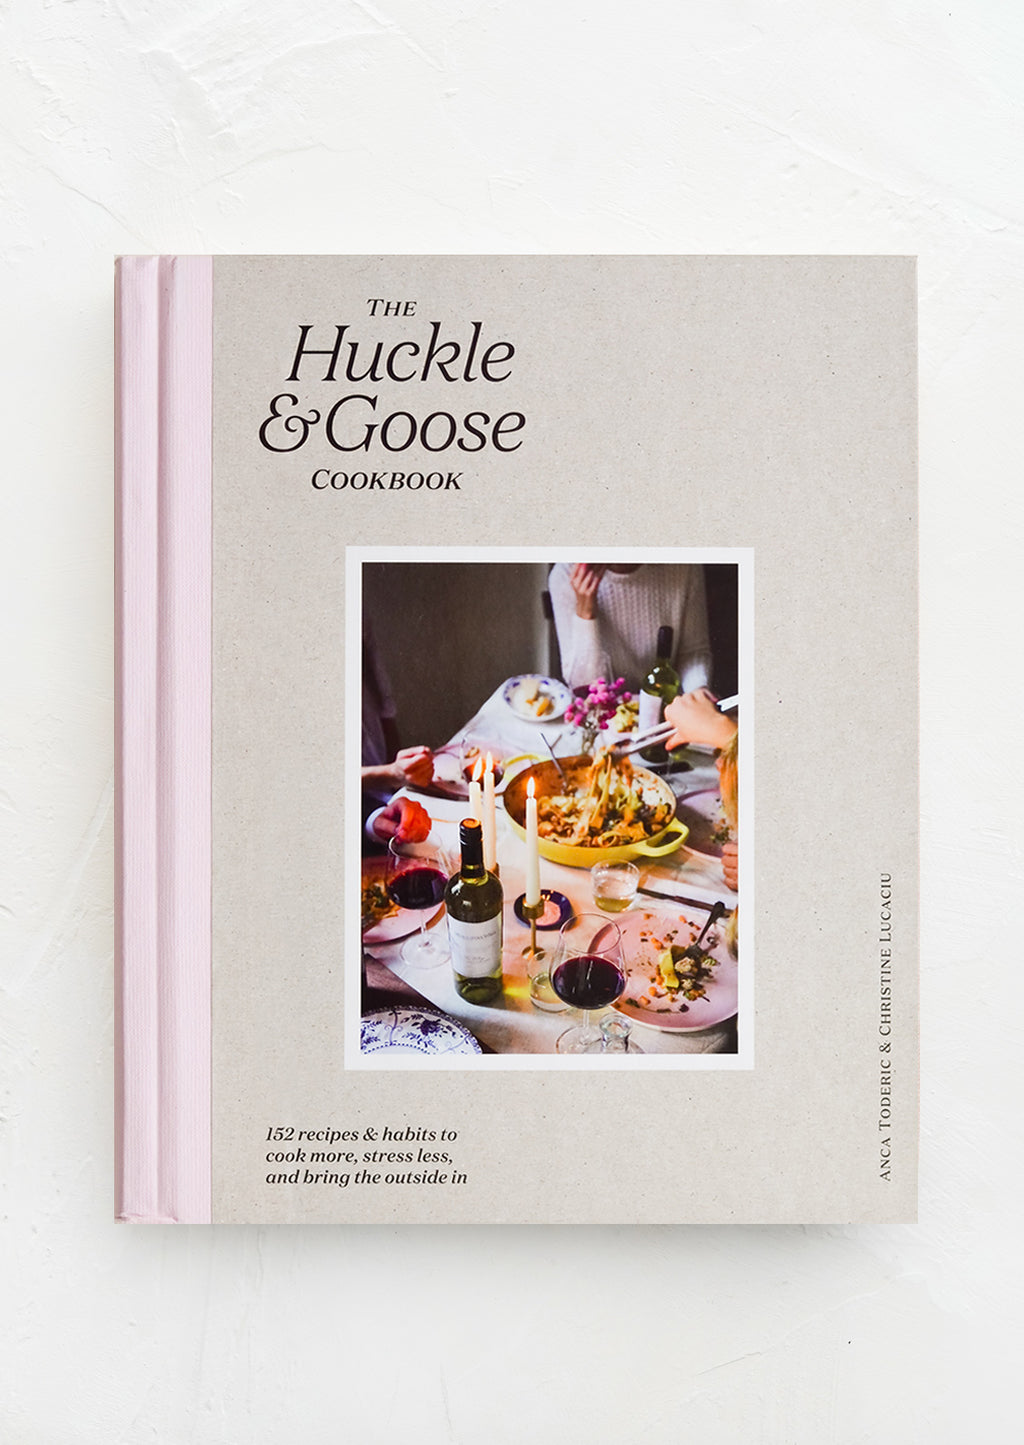 1: The huckle & goose cookbook hardcover.